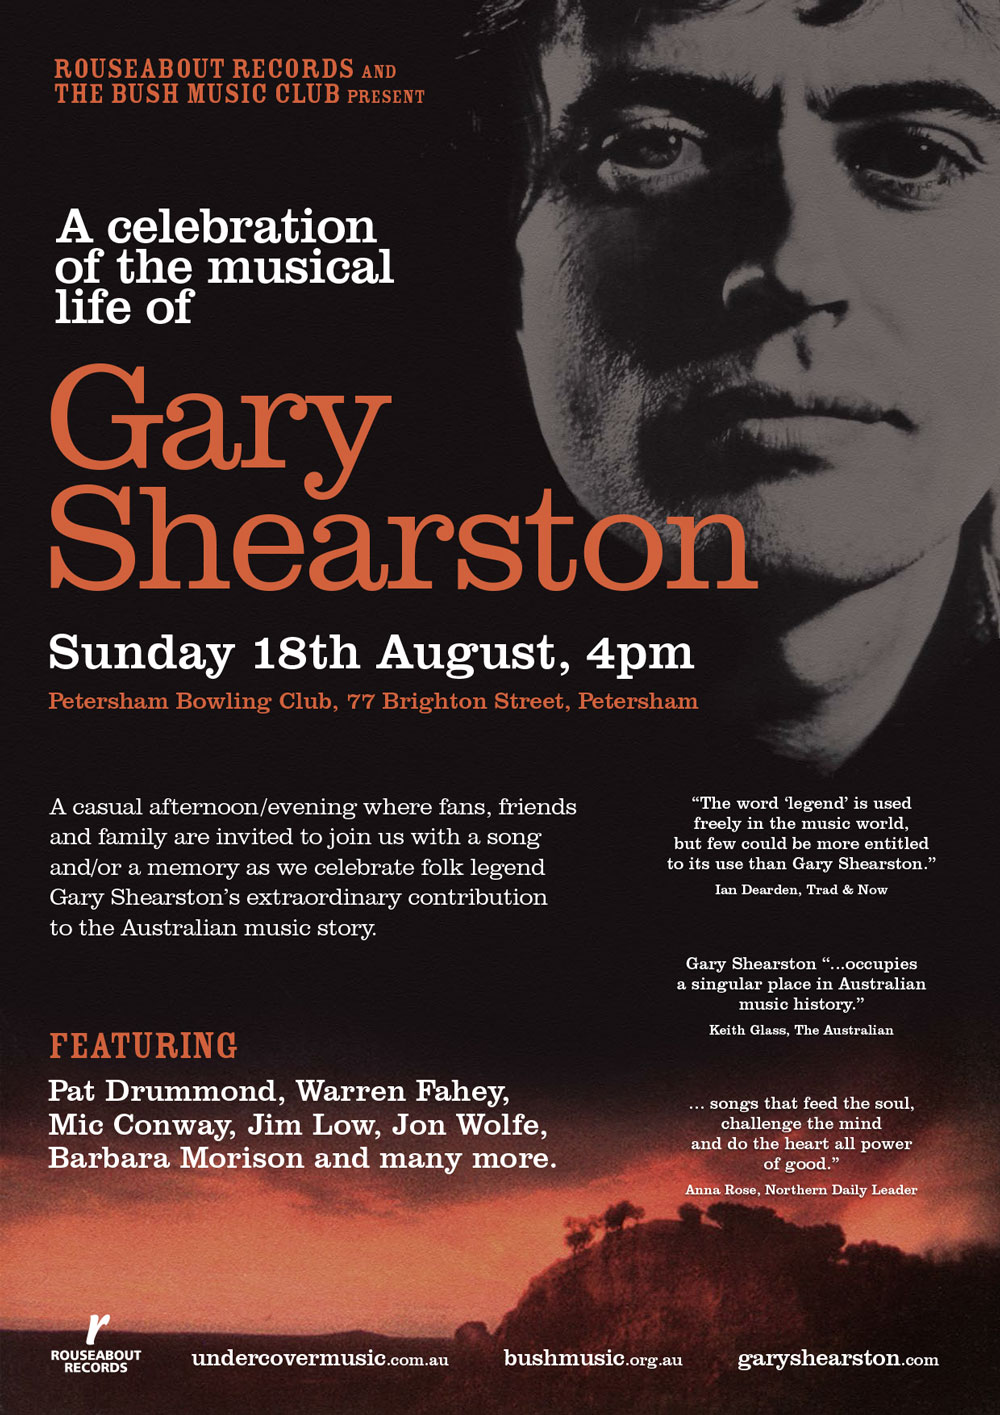 Gary Shearsston